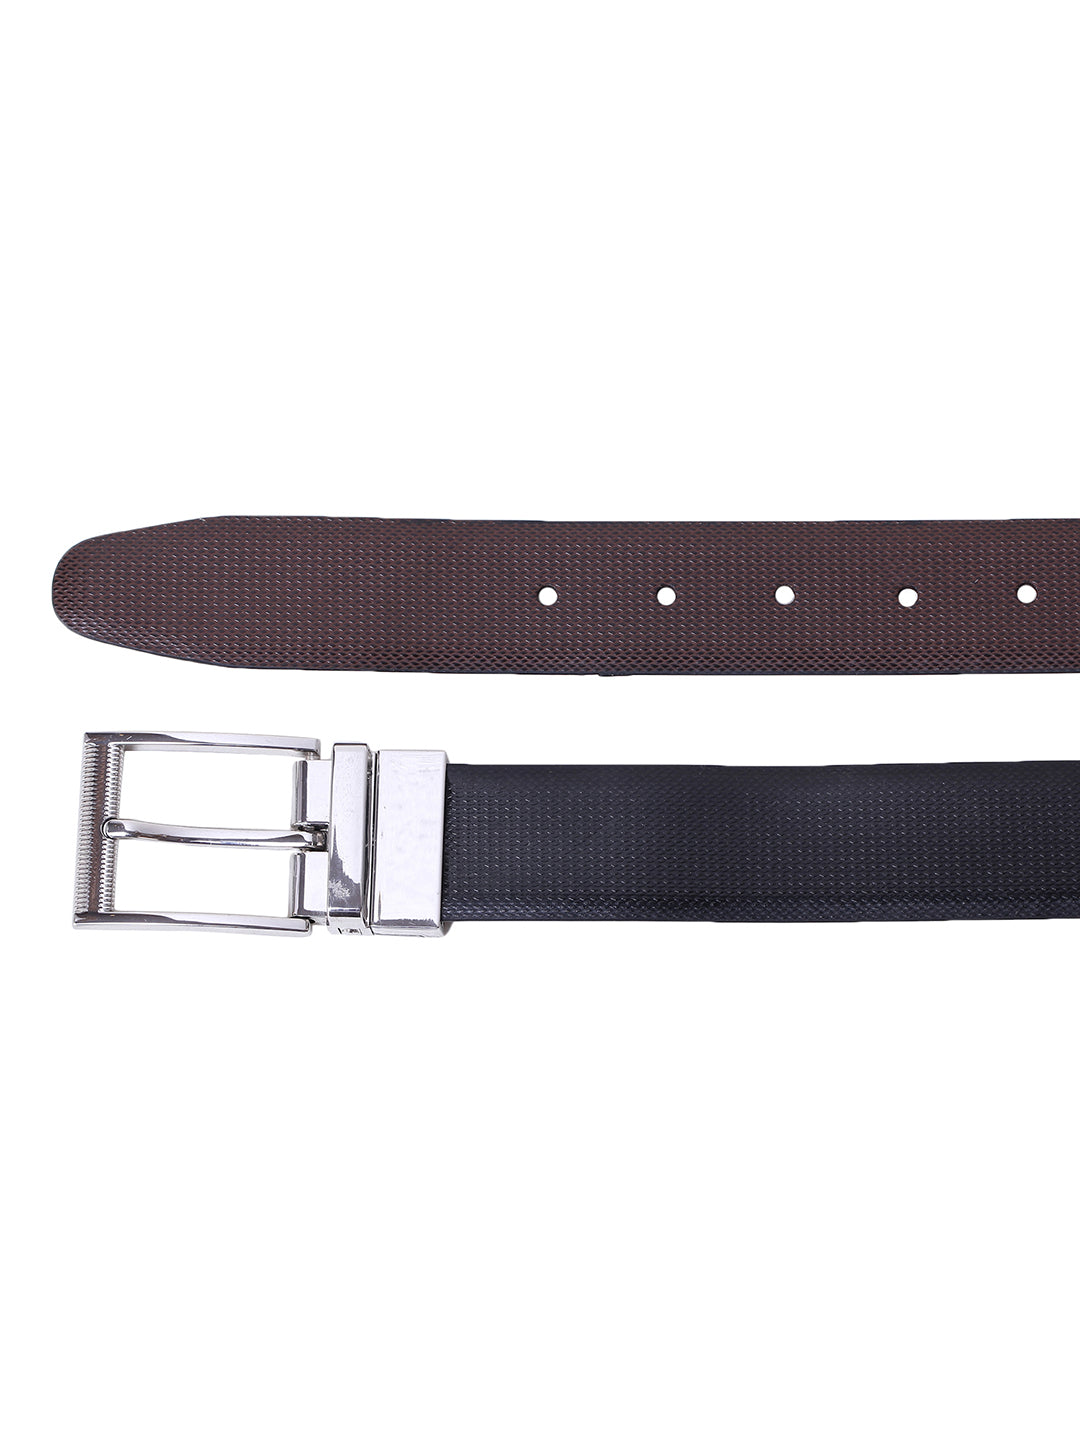 Alvaro Castagnino Men's Black Color Leather Belt